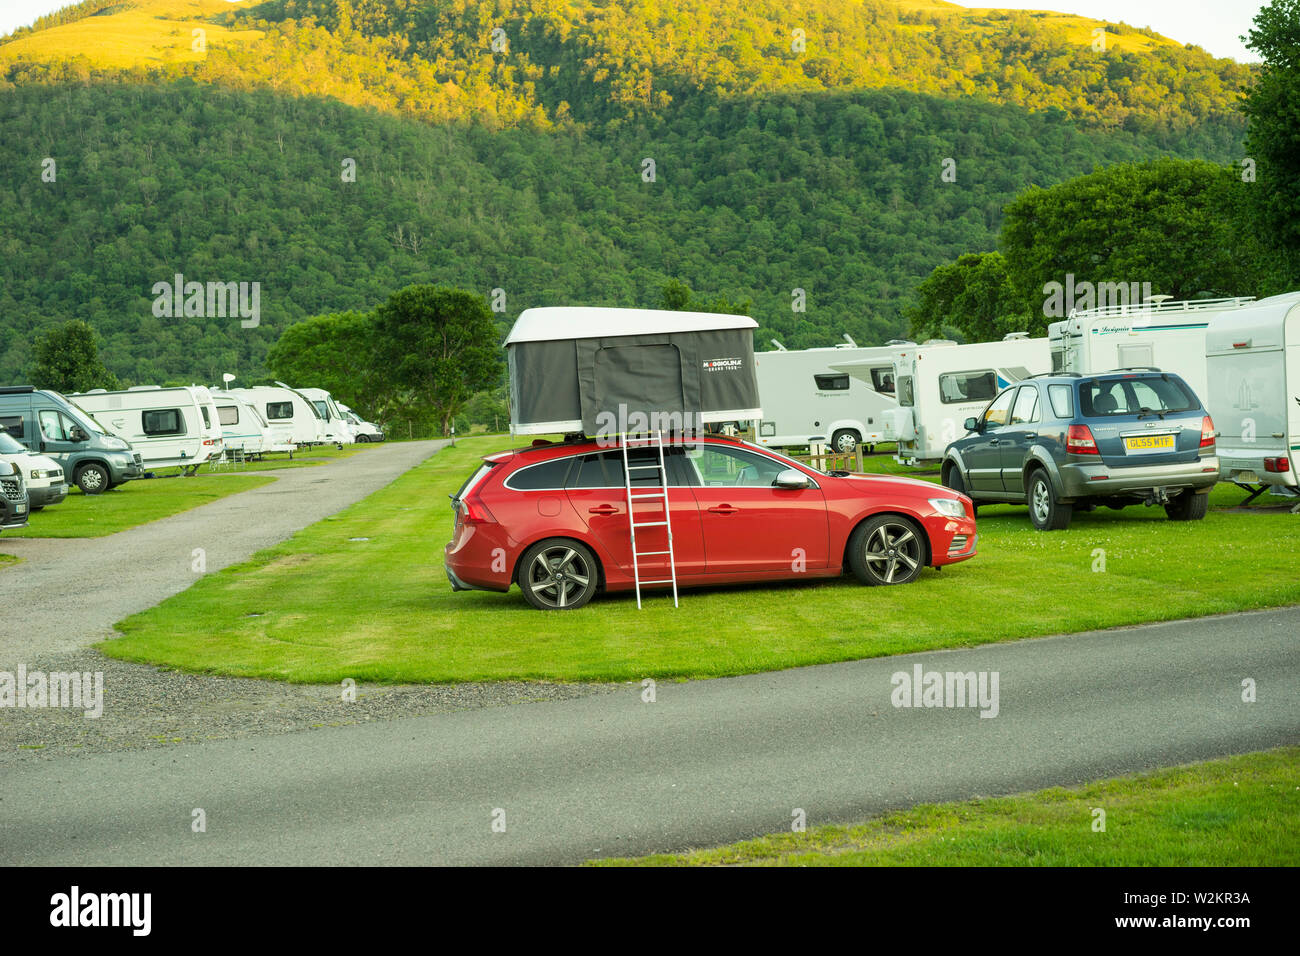 Unorthodox camping equipment on top of a car, Scotland, UK. Stock Photo